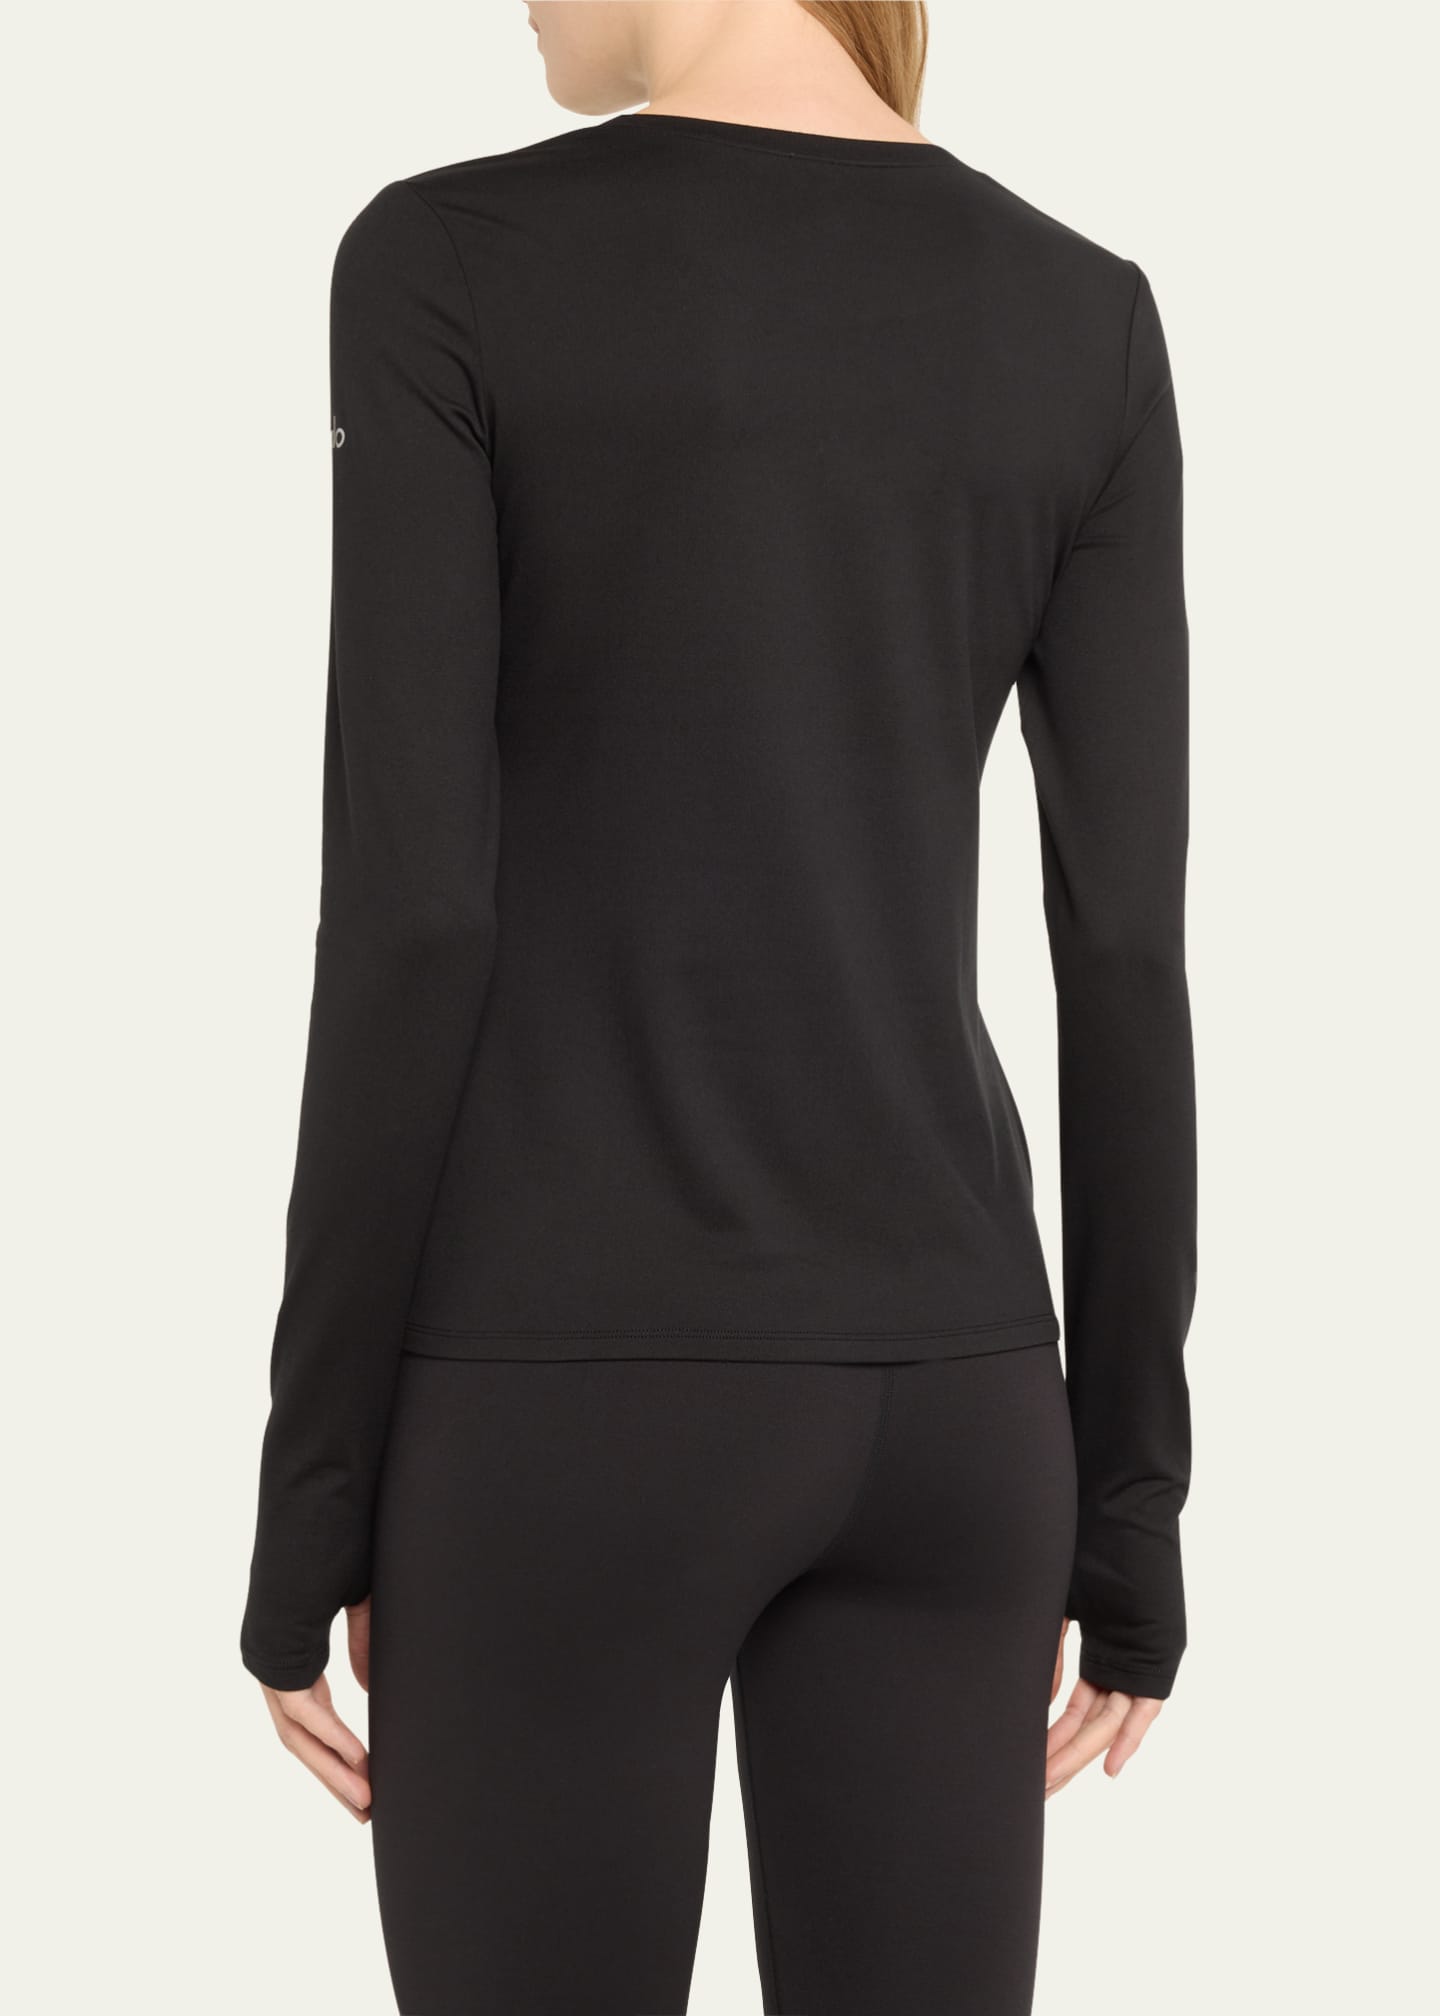 Alo Yoga Aqua Woven Mesh Zip-Front Activewear Jacket - Bergdorf Goodman